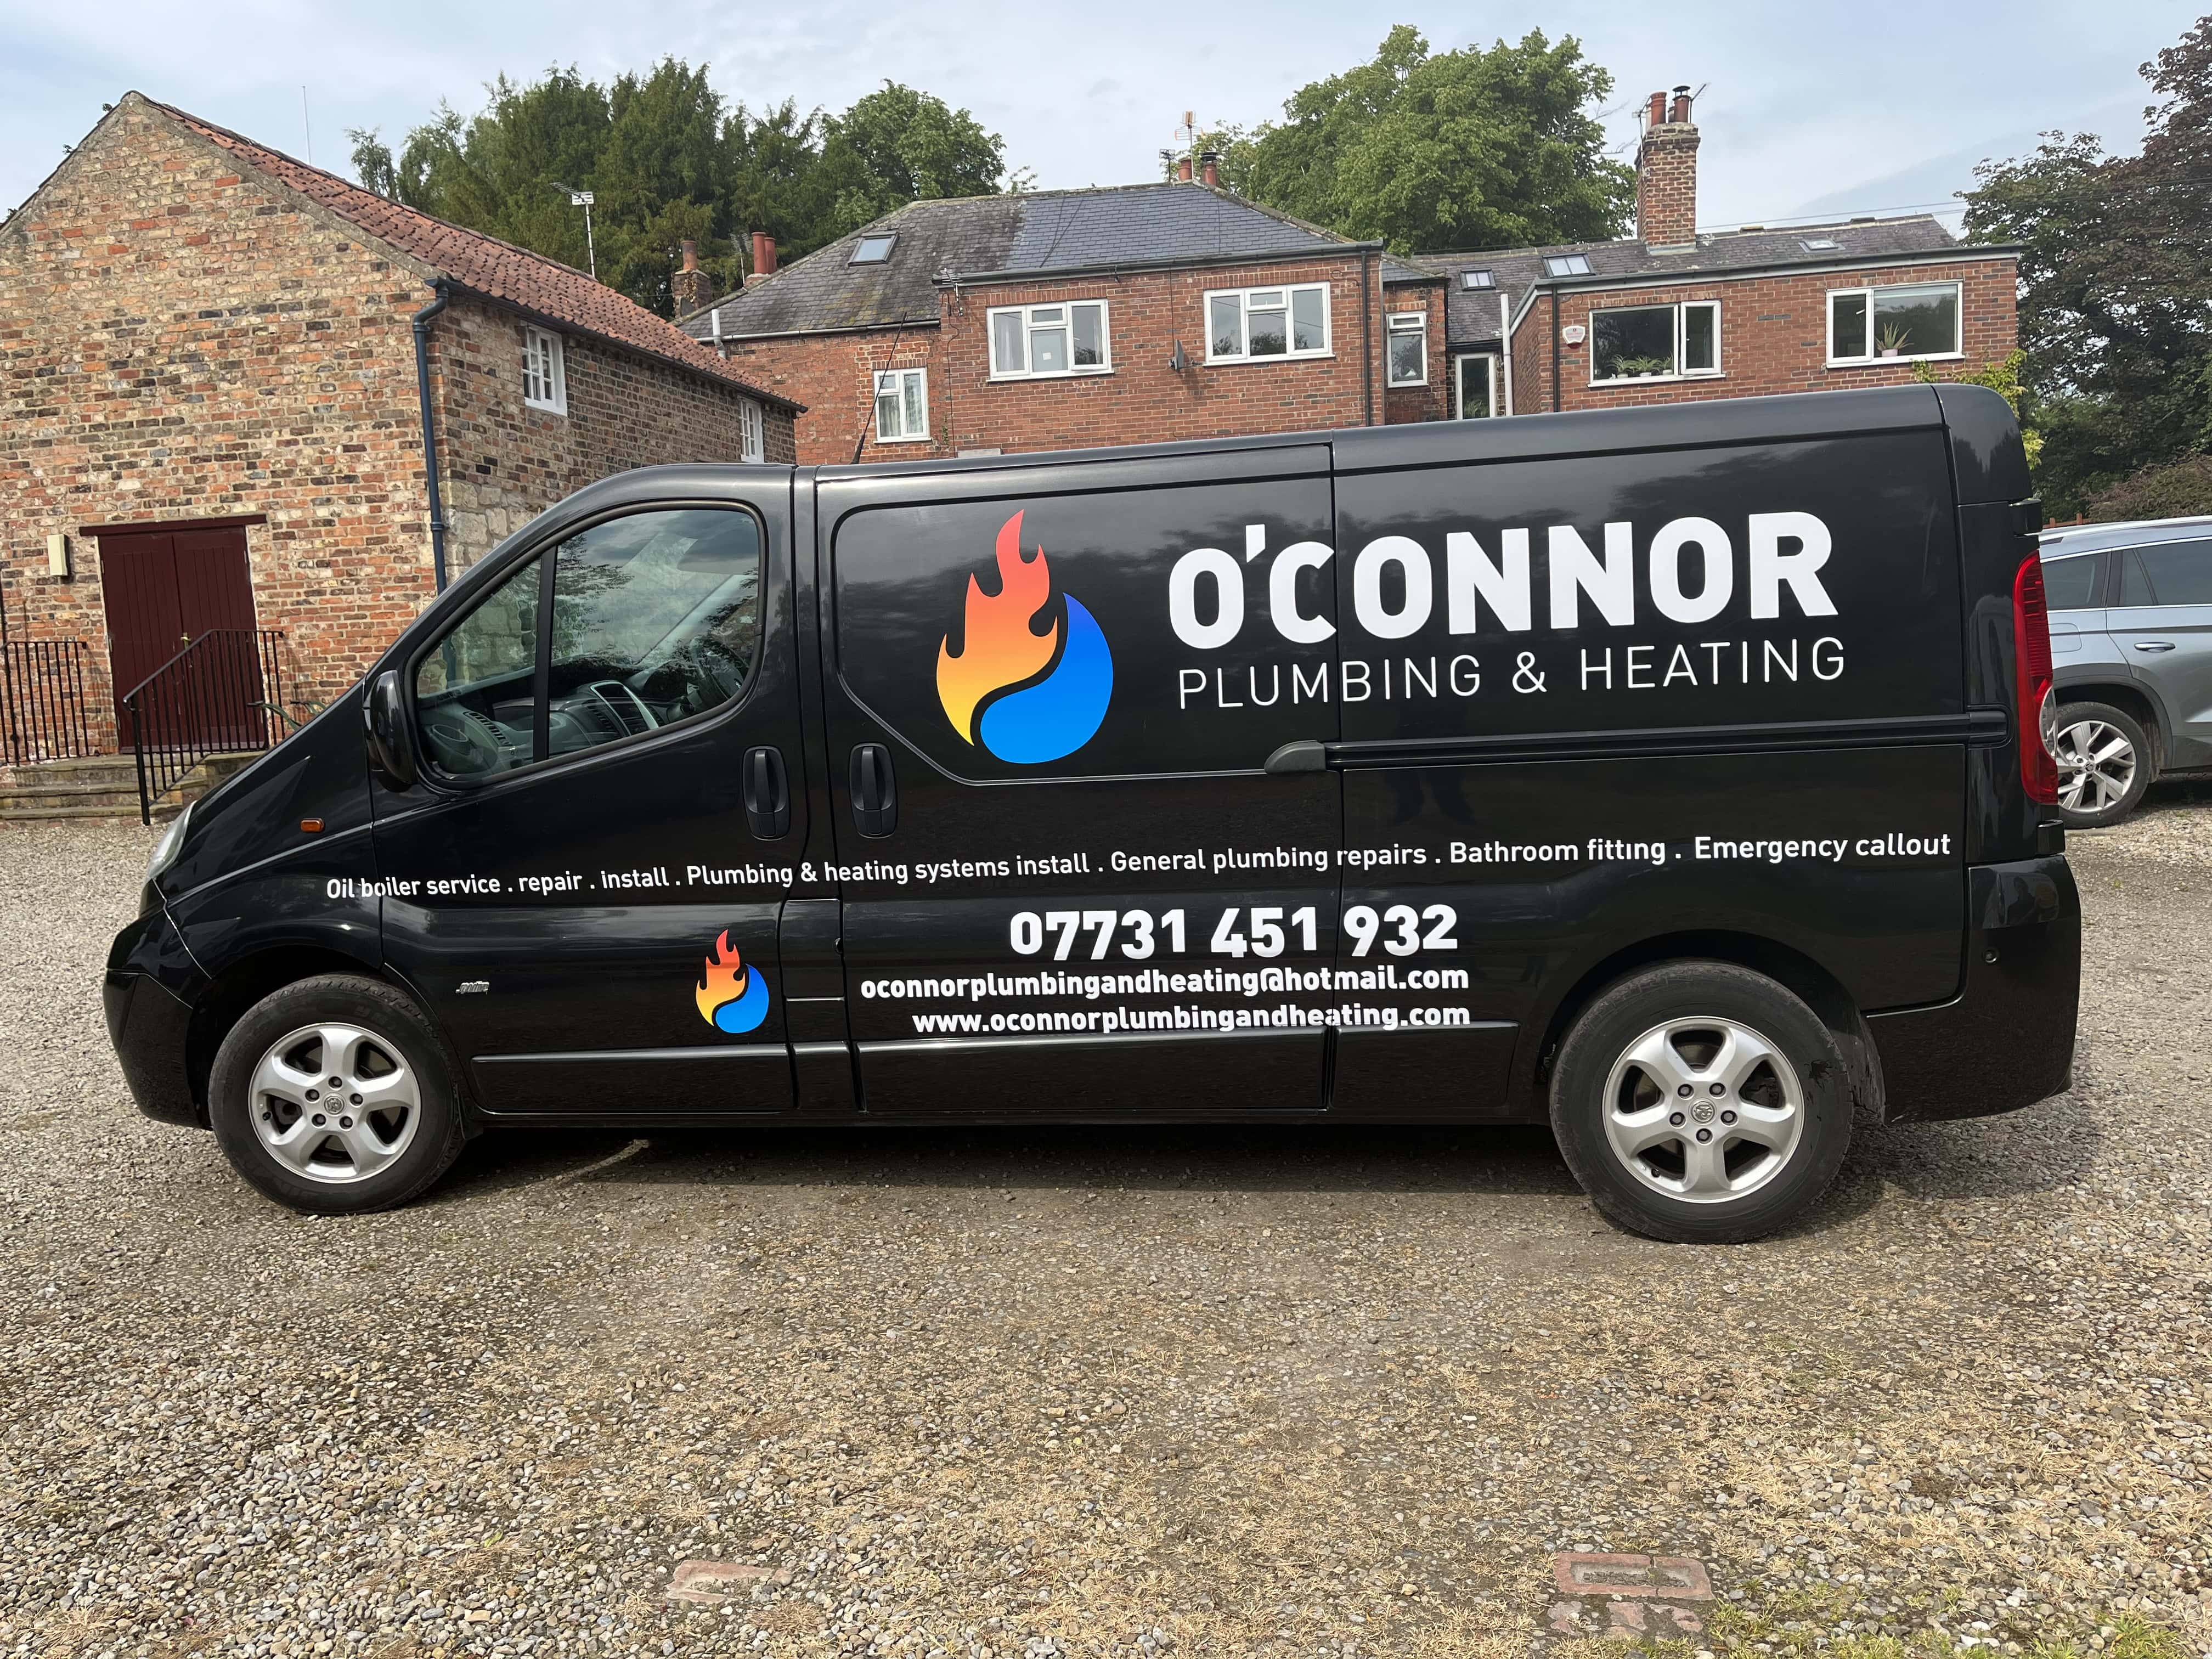 O' Connor Plumbing and Heating - York, UK, 24 hour plumber